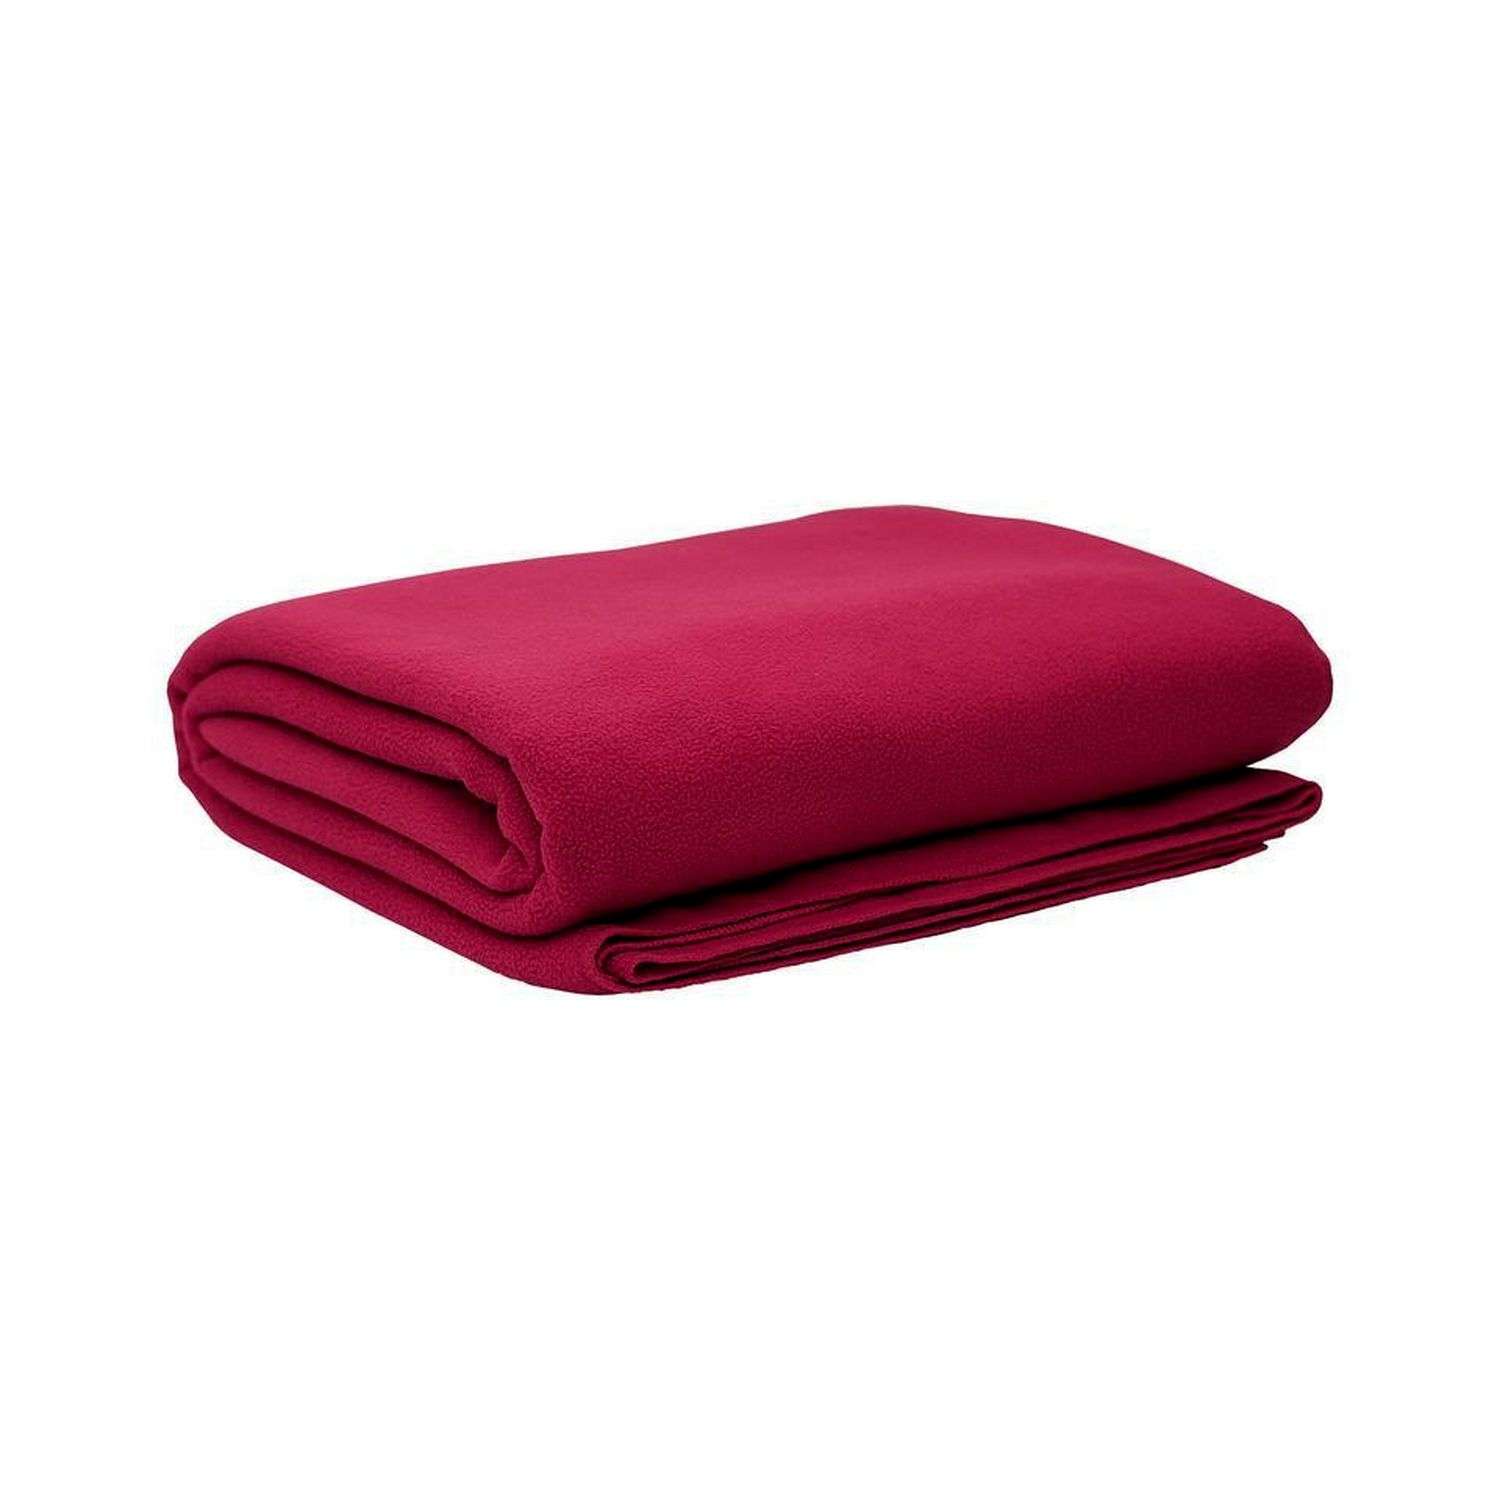 Одеяло-плед Uniglodis с рукавами бордовый - фото 1